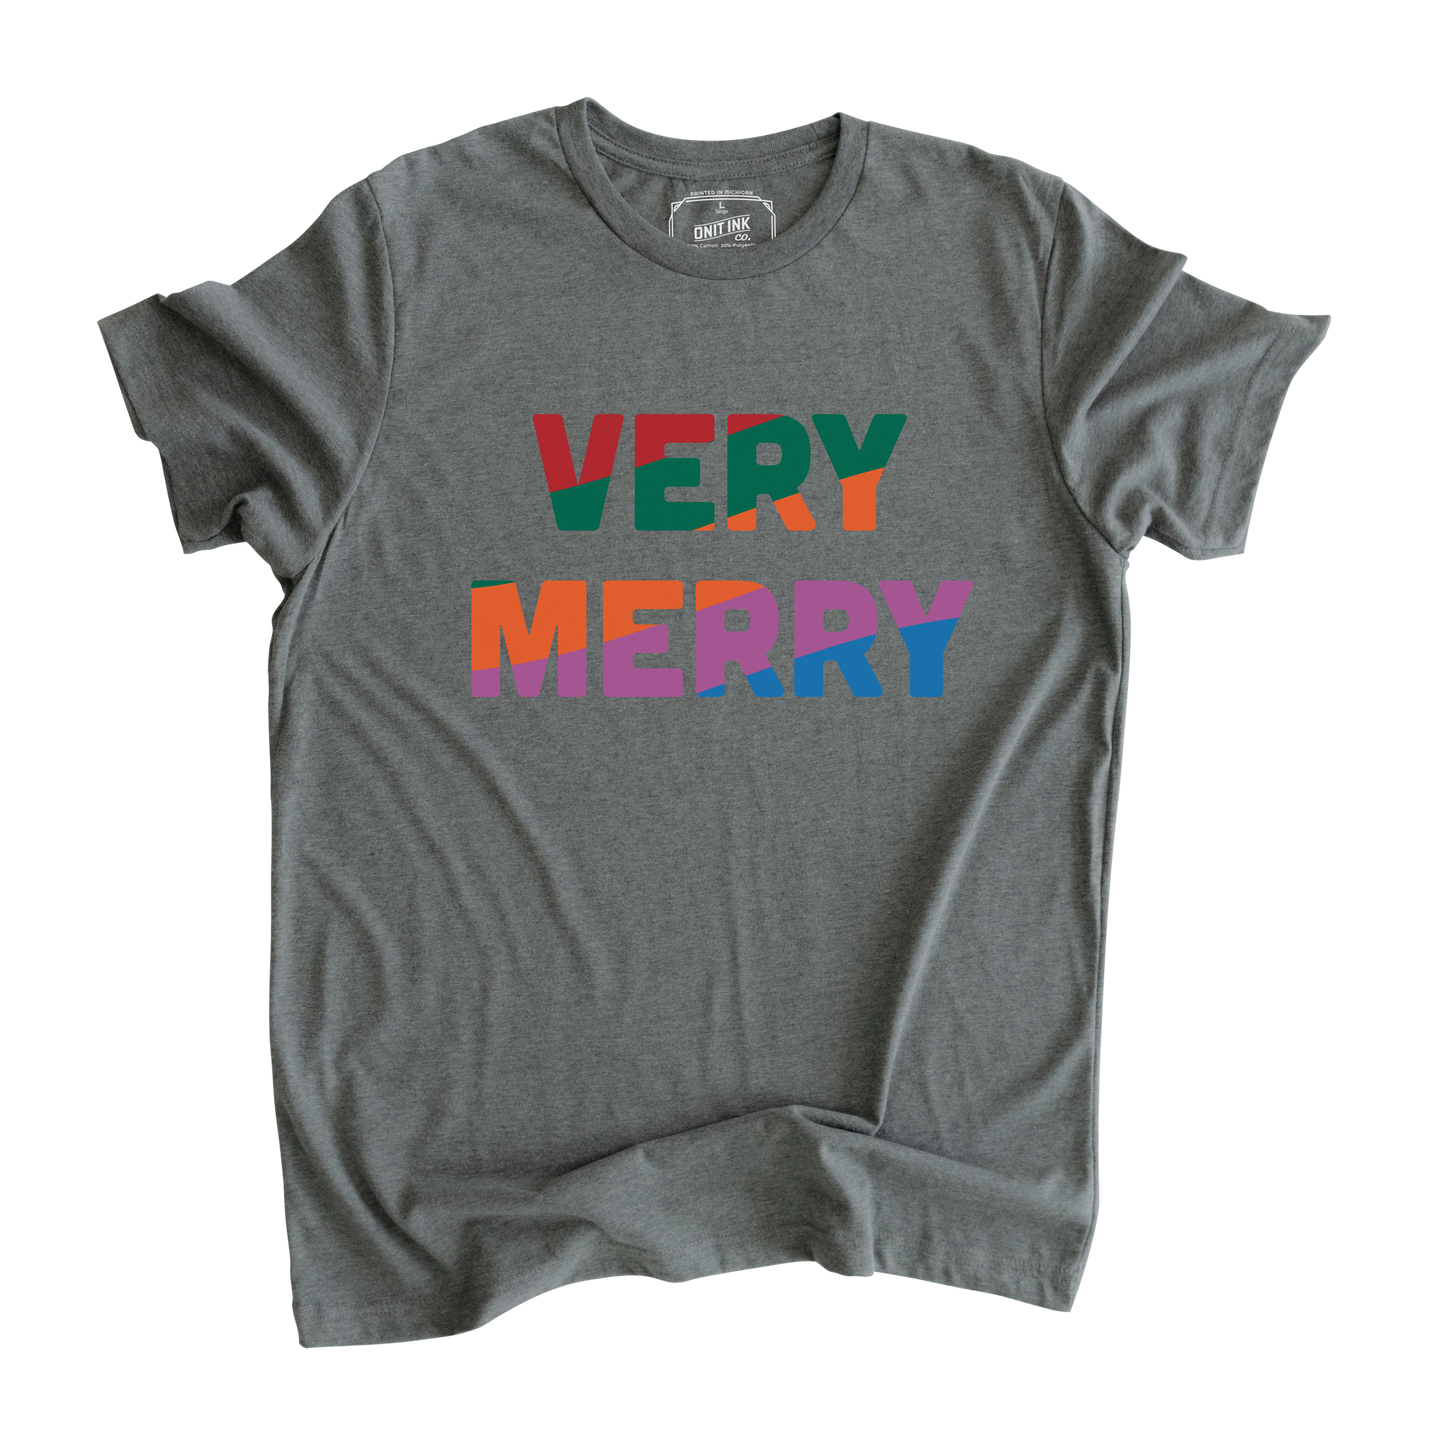 Very Merry T-Shirt